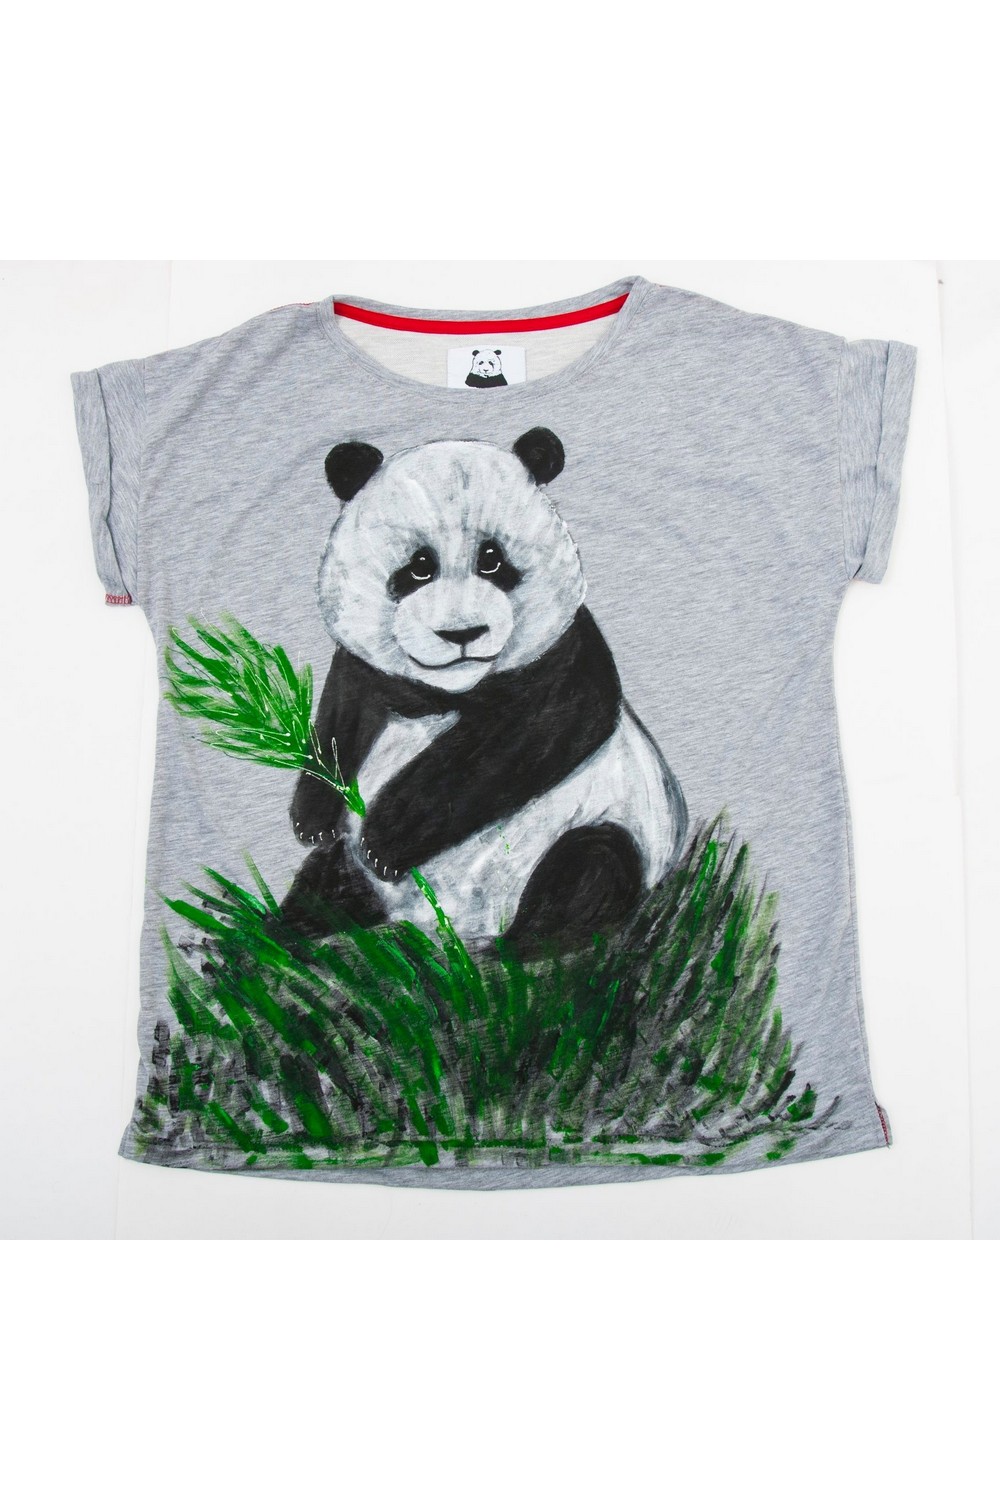 Buy Gym Women Grey Cotton Print tee shirt , Short sleeve Panda tshirt, Unique stylish t shirt